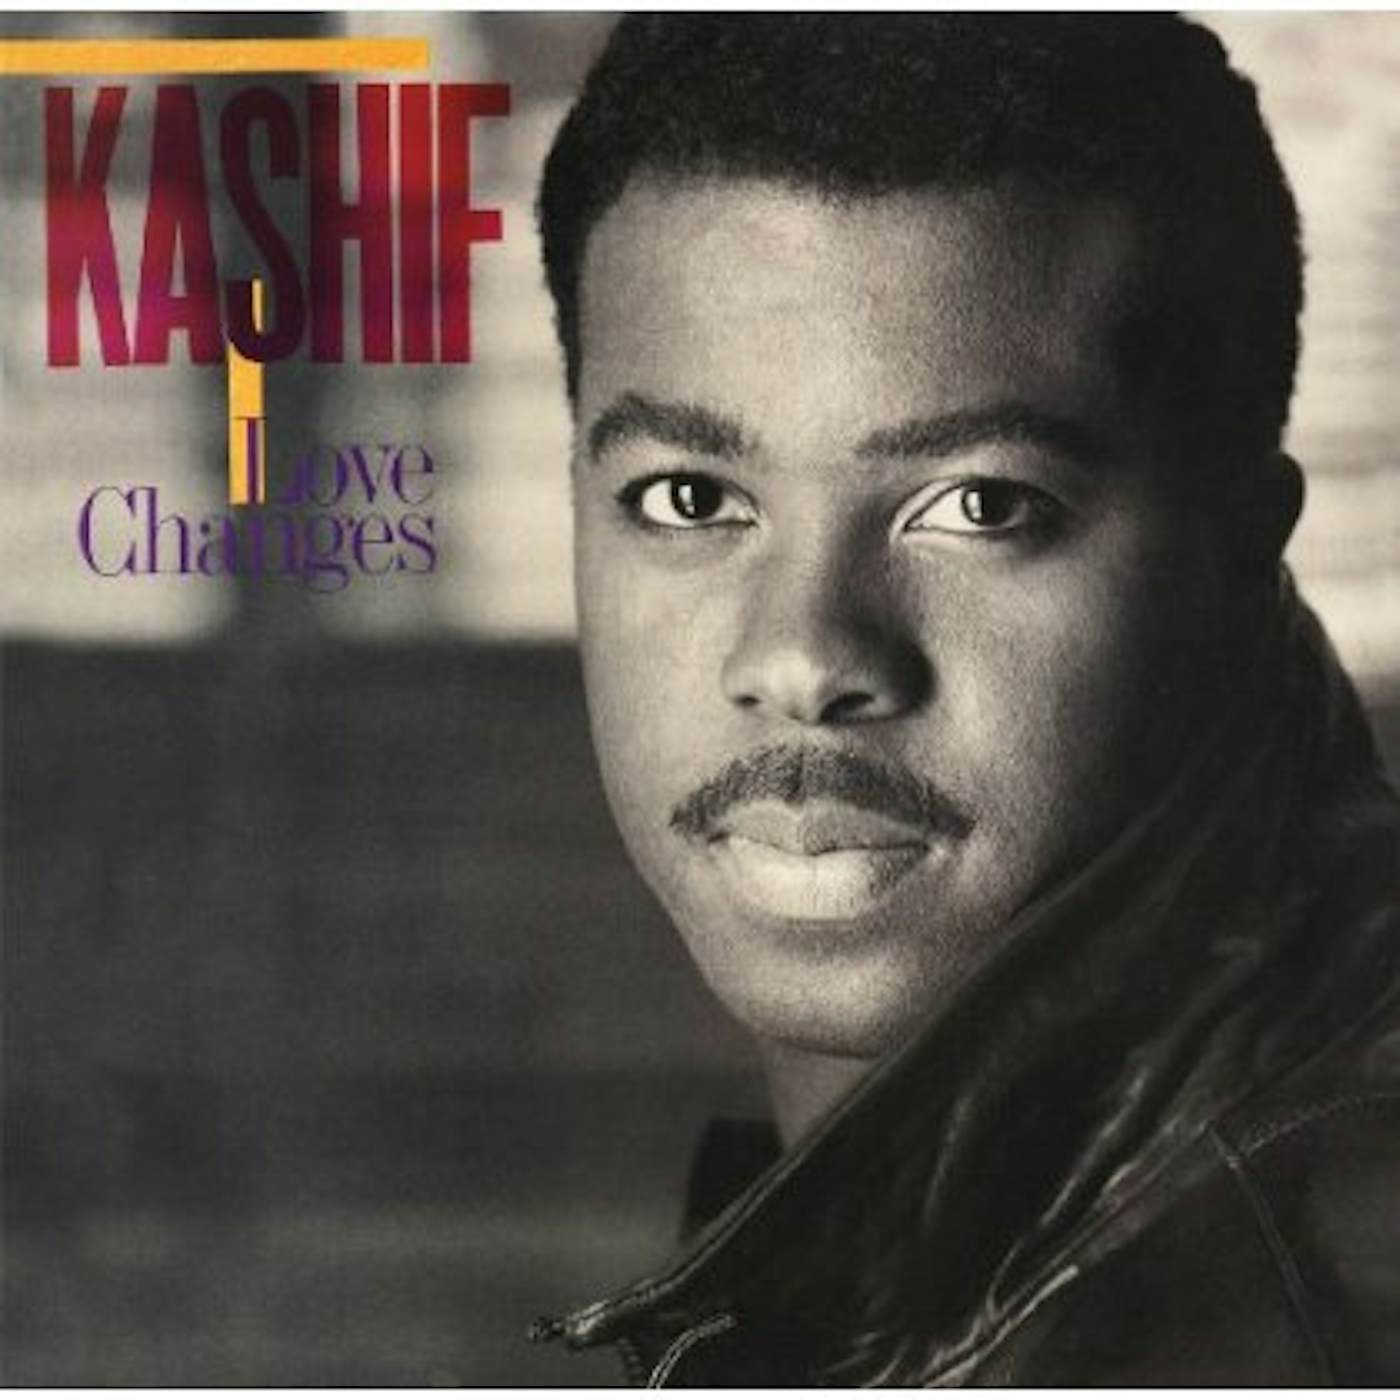 Kashif LOVE CHANGES (BONUS TRACKS EDITION) CD